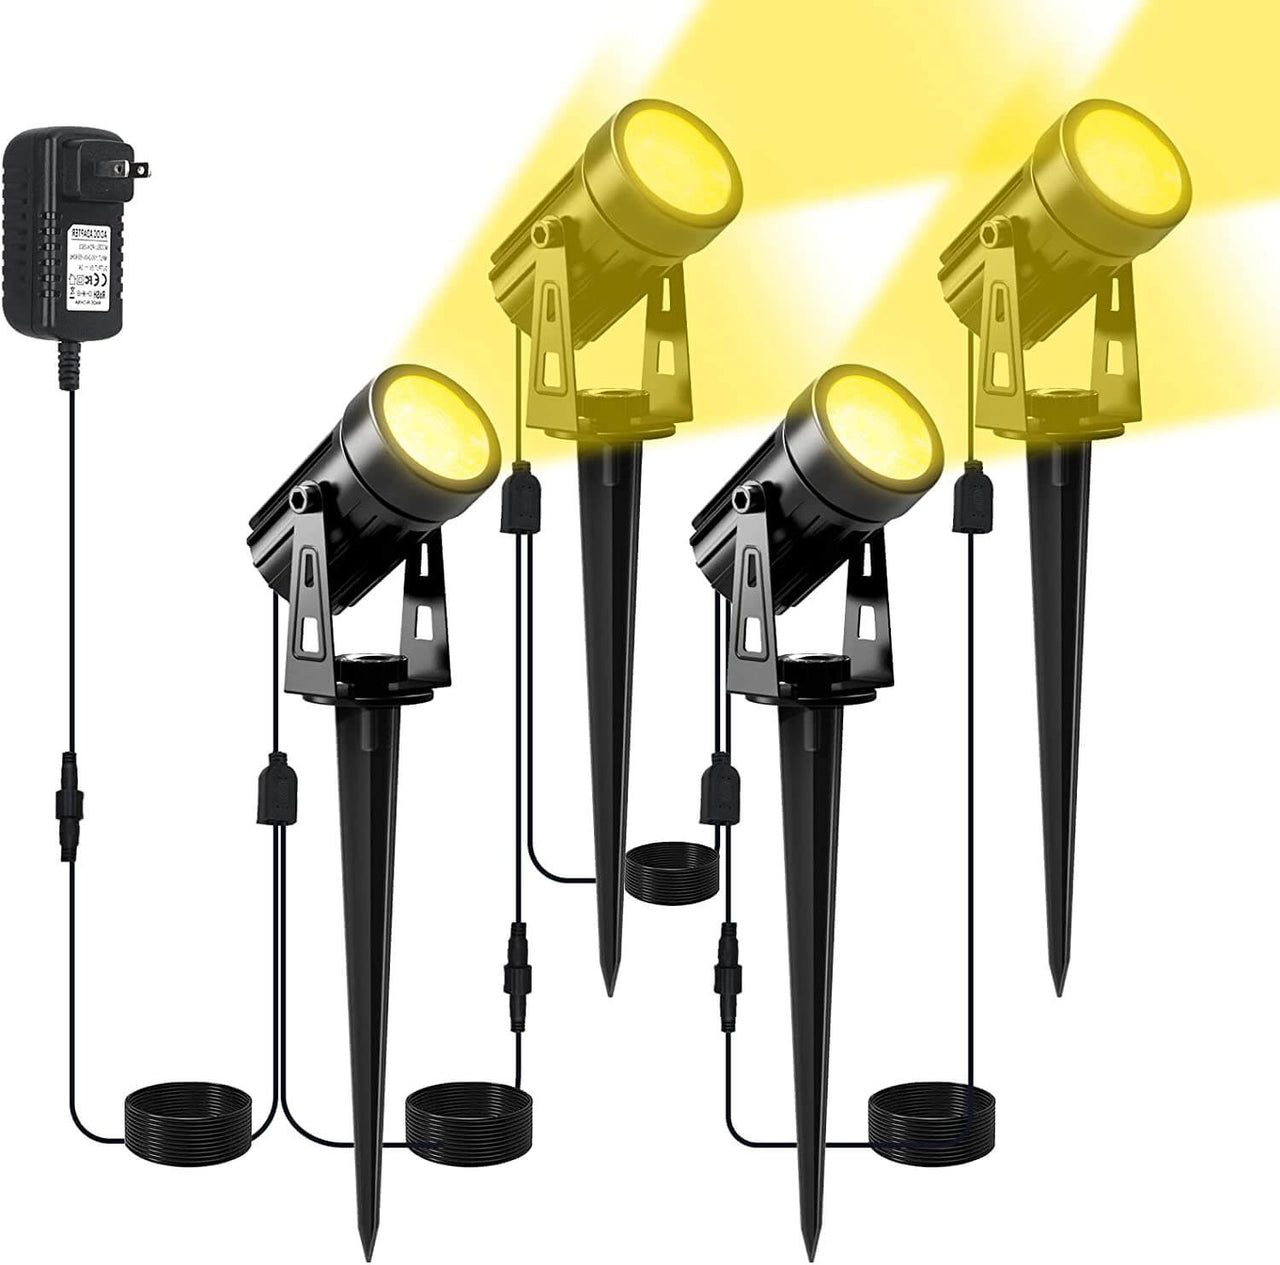 TSUN 4 Heads LED Spotlight Landscape Lighting Kits